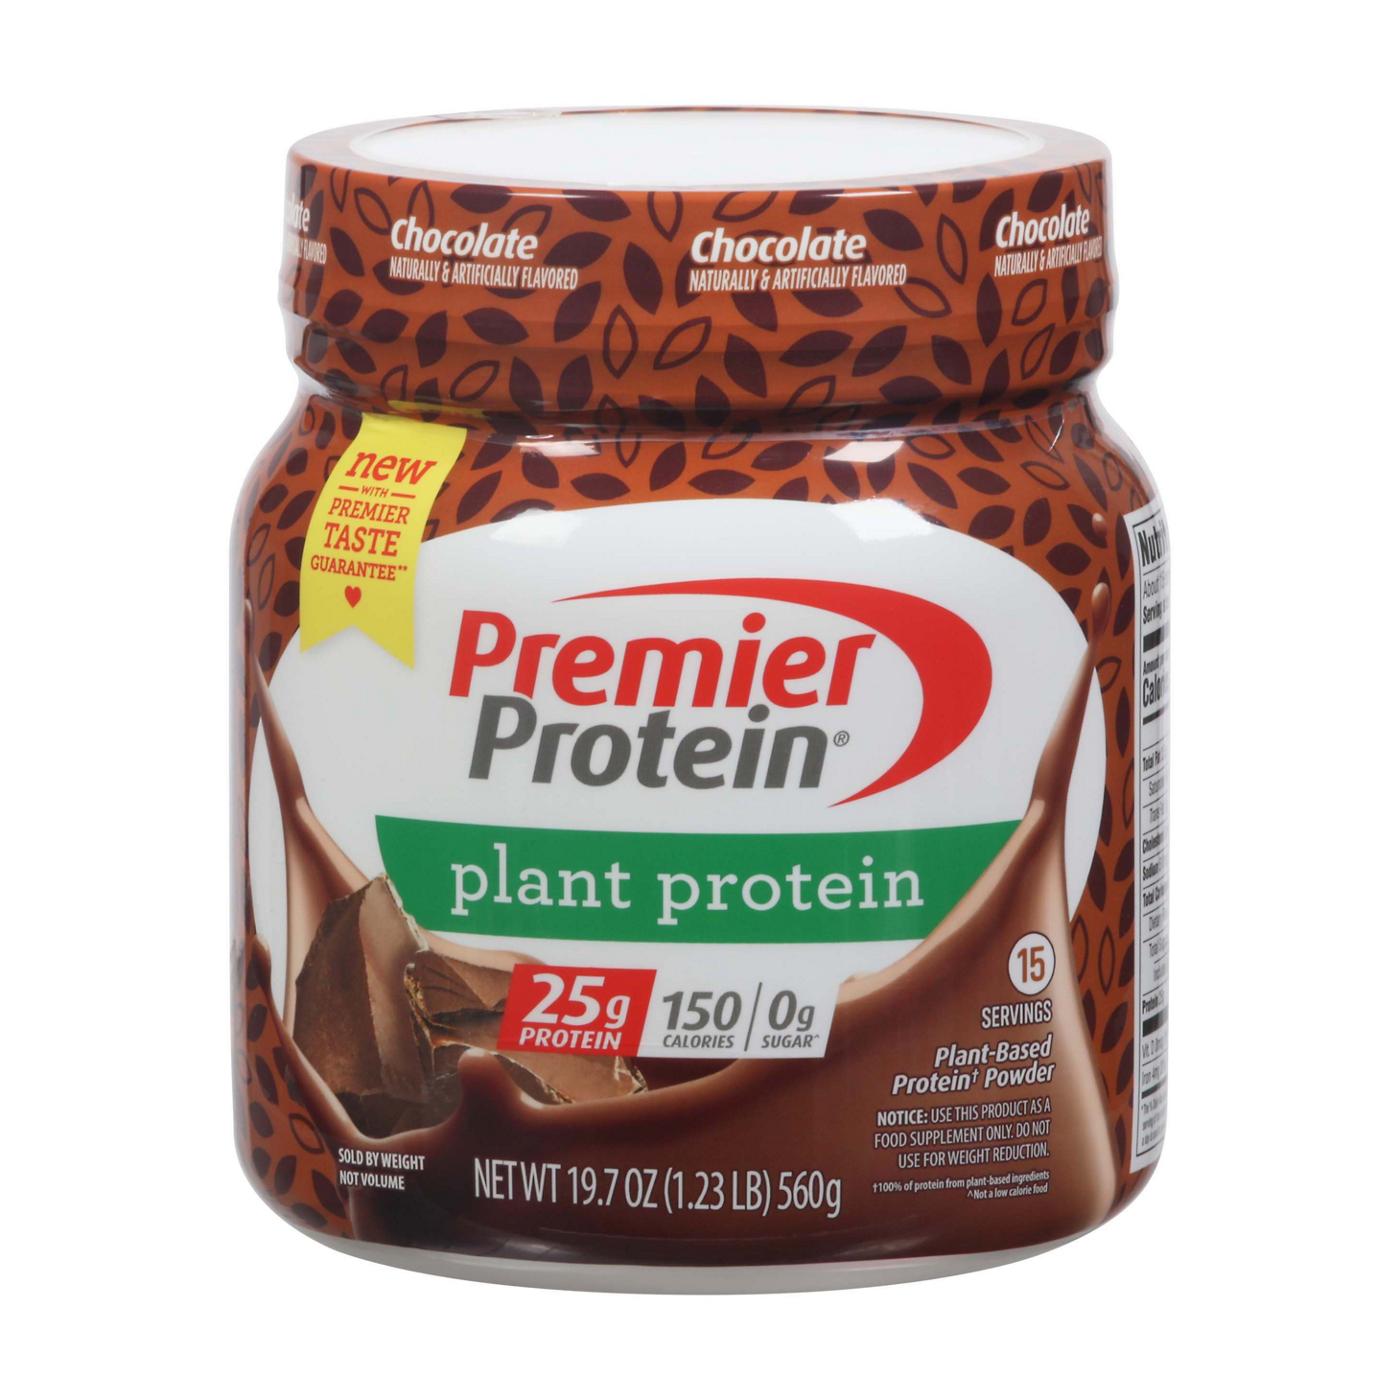 Premier Protein Plant Protein Powder, 25g - Chocolate; image 1 of 3